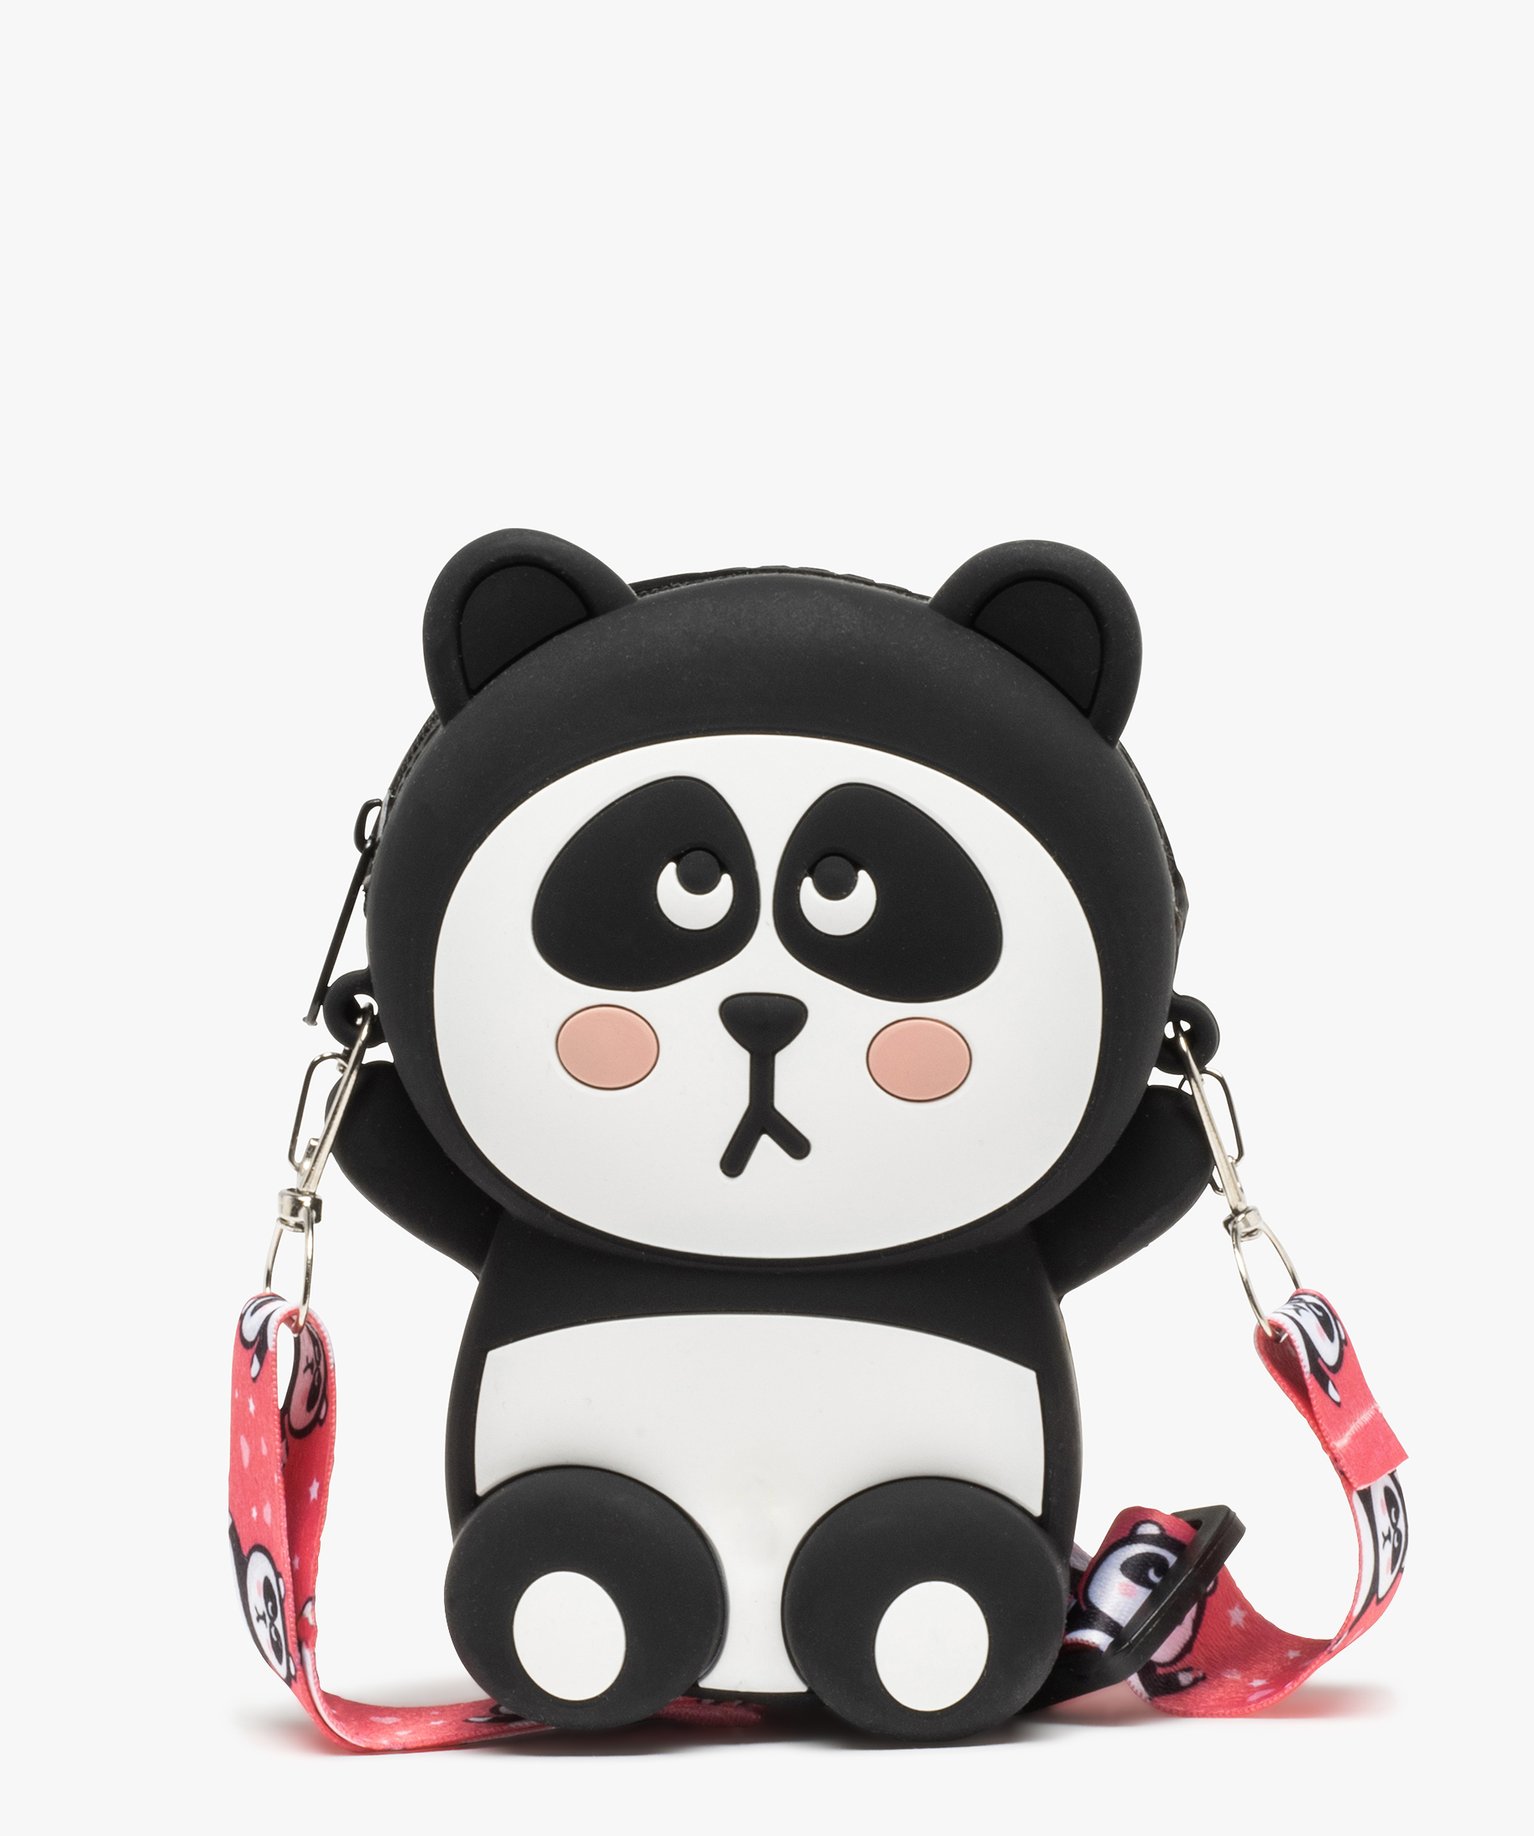 pochette fille forme panda avec cordon satine amovible noir